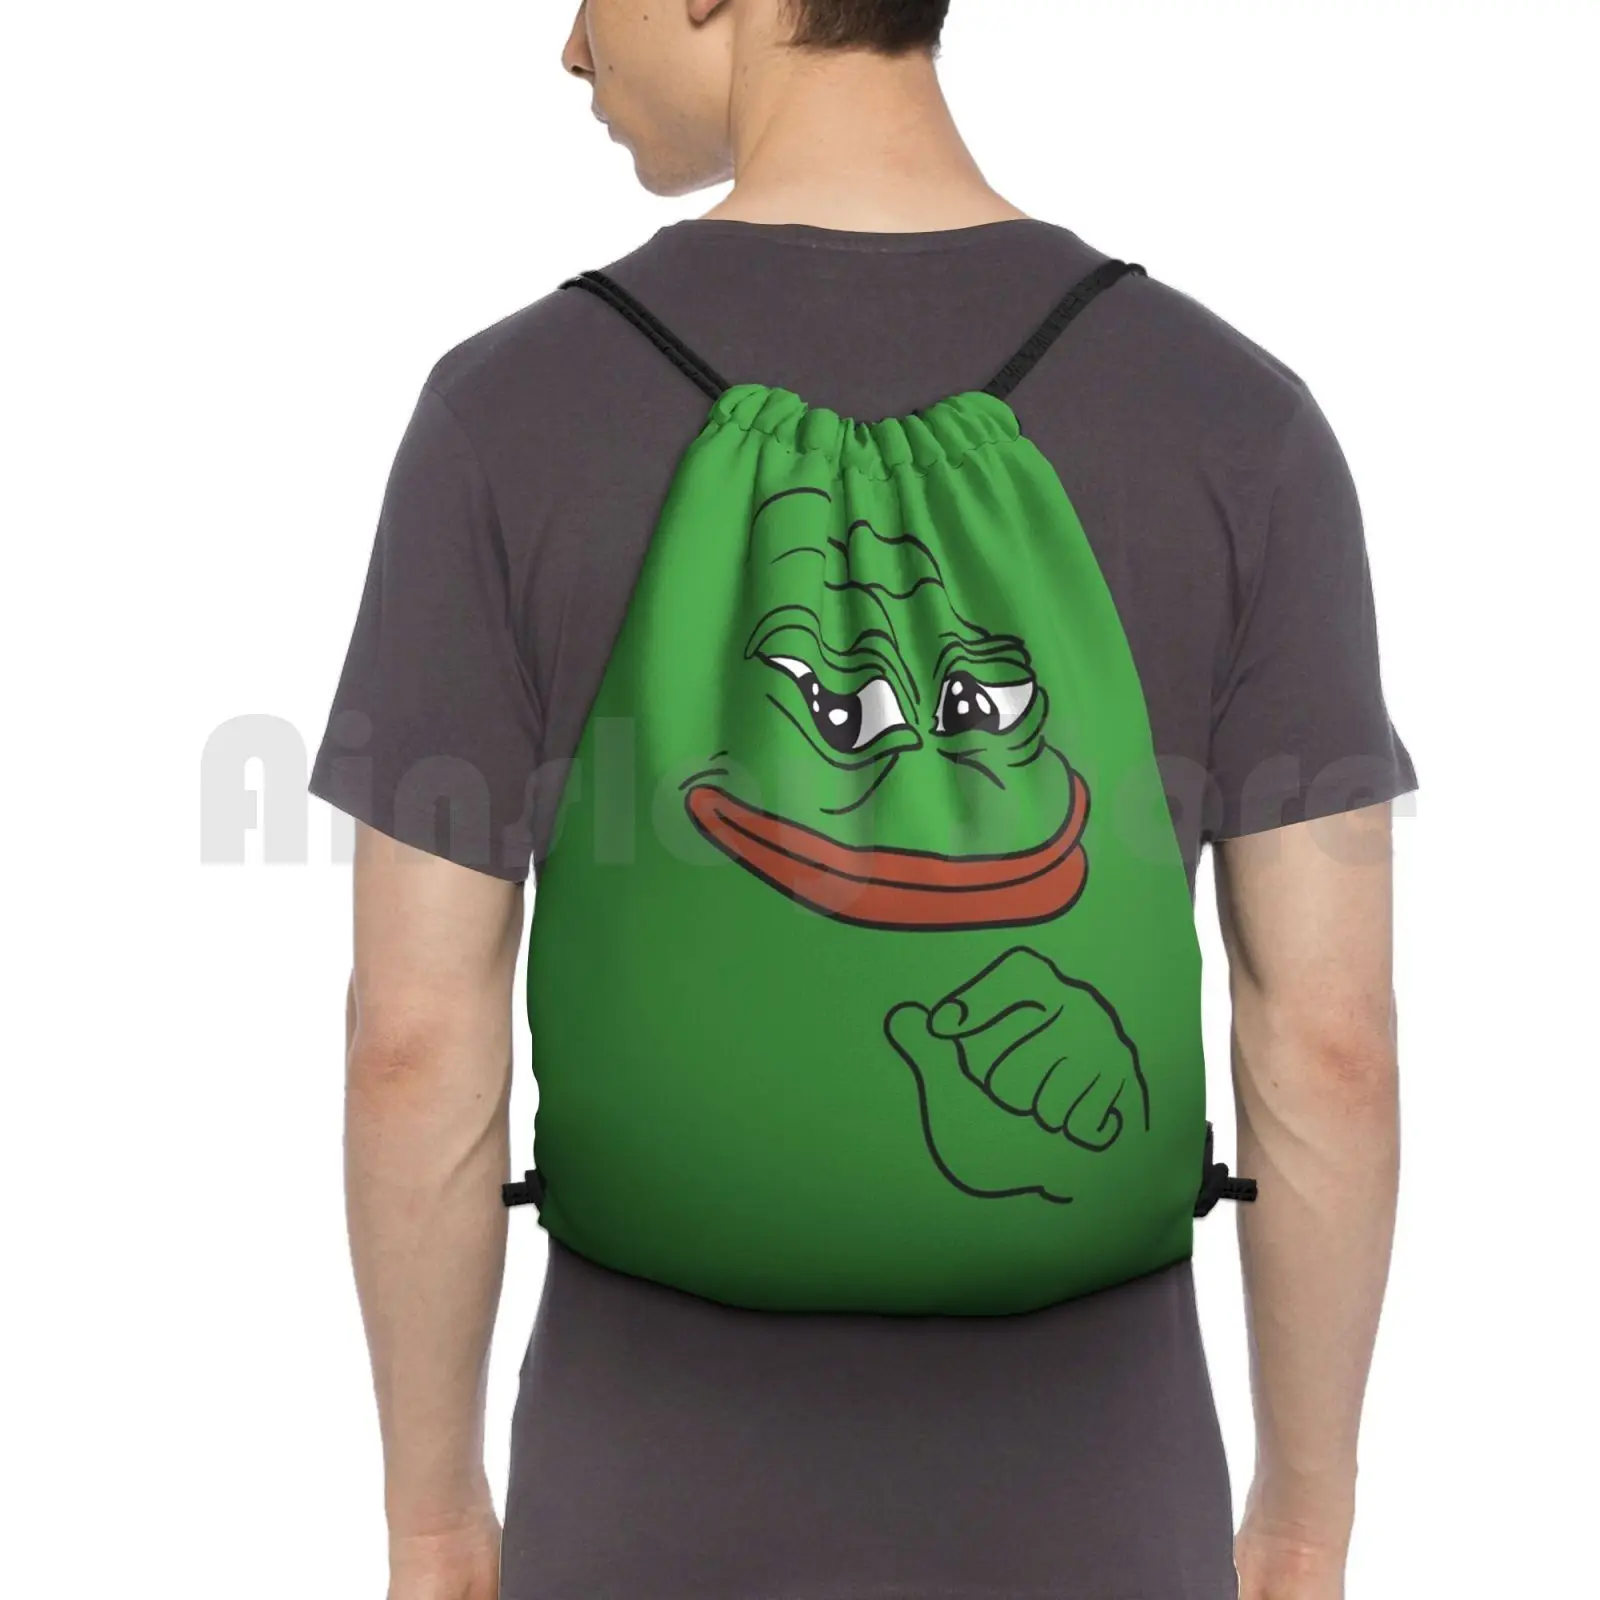 Рюкзак Smug The Frog, сумки на шнурках, спортивная сумка, водонепроницаемая спортивная сумка Smug Frog, Зеленое животное, Мем, Юмор Trump Kek 4Chan Reddit